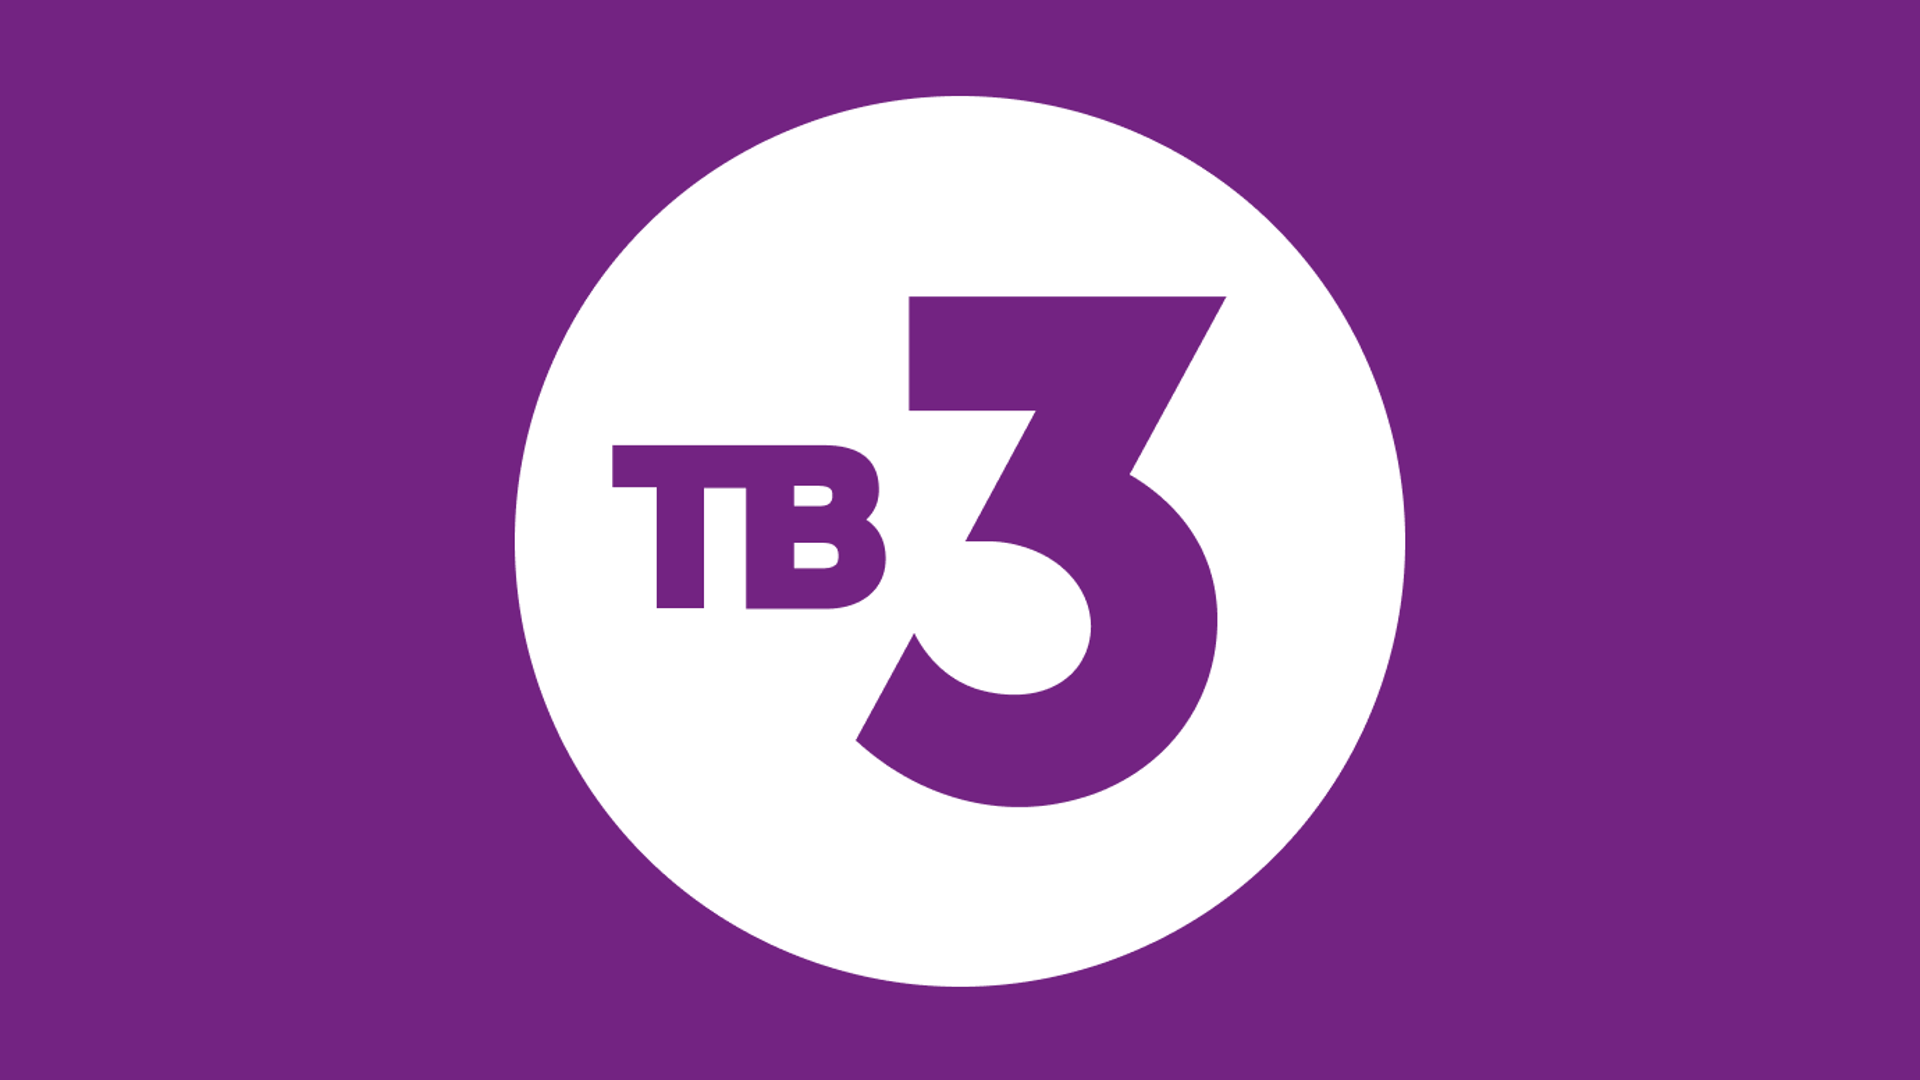 Трансляция 3 канала. Тв3 логотип. Тв3 Телеканал логотип. Канал тв3. ТВ 3 эмблема.